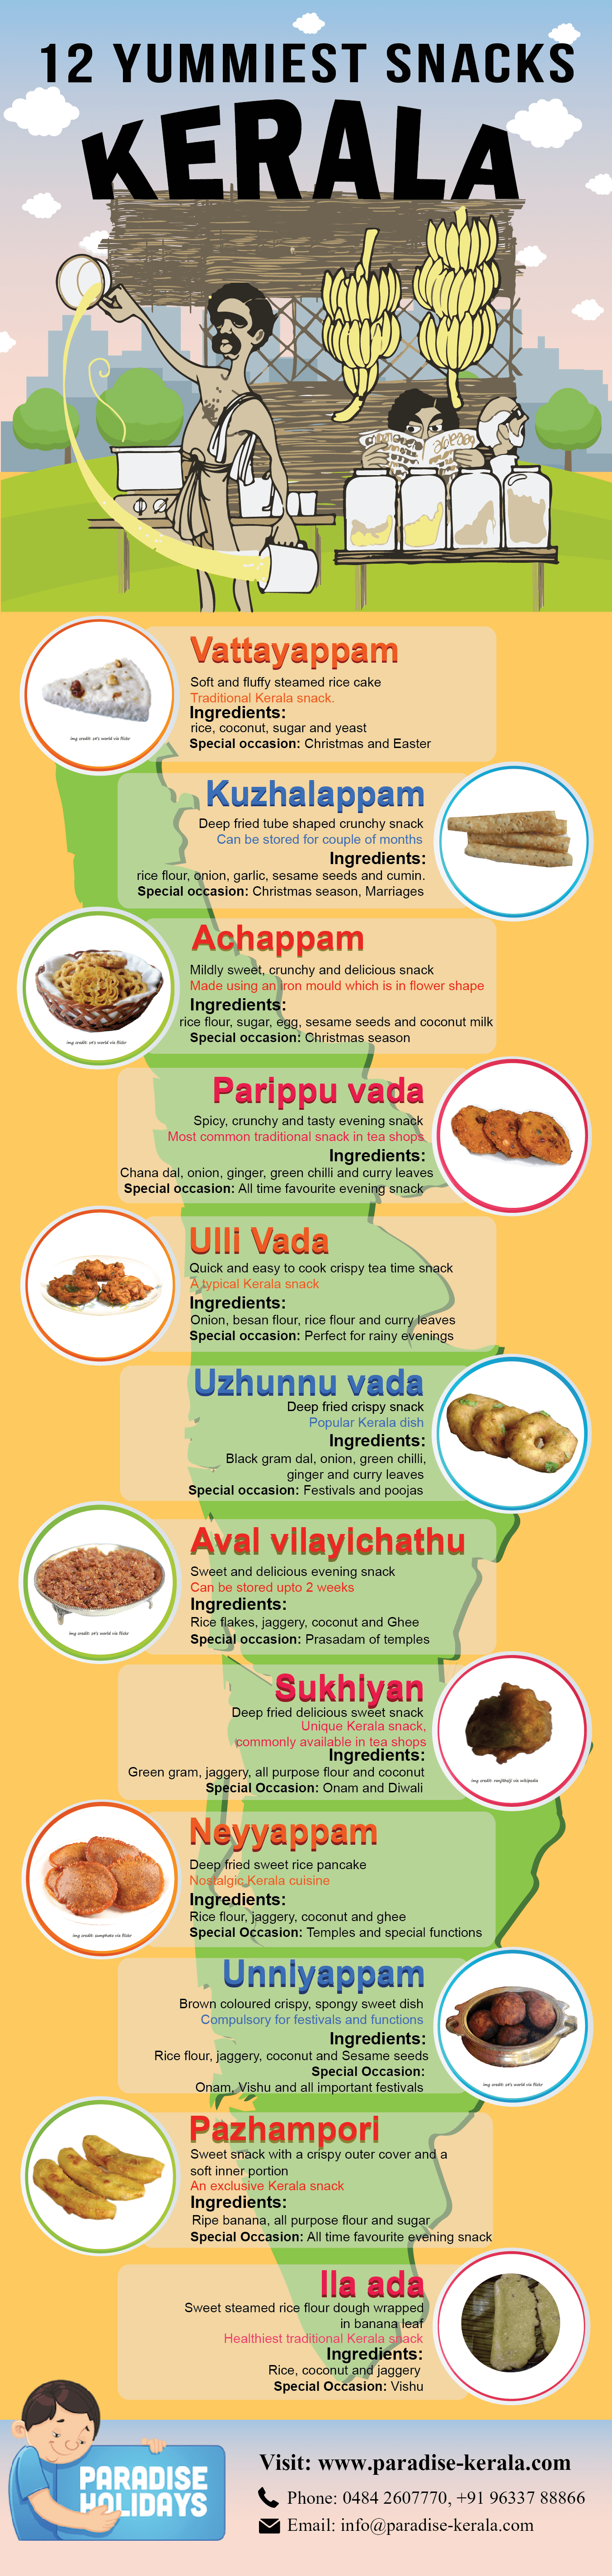 Yummiest-snacks-kerala